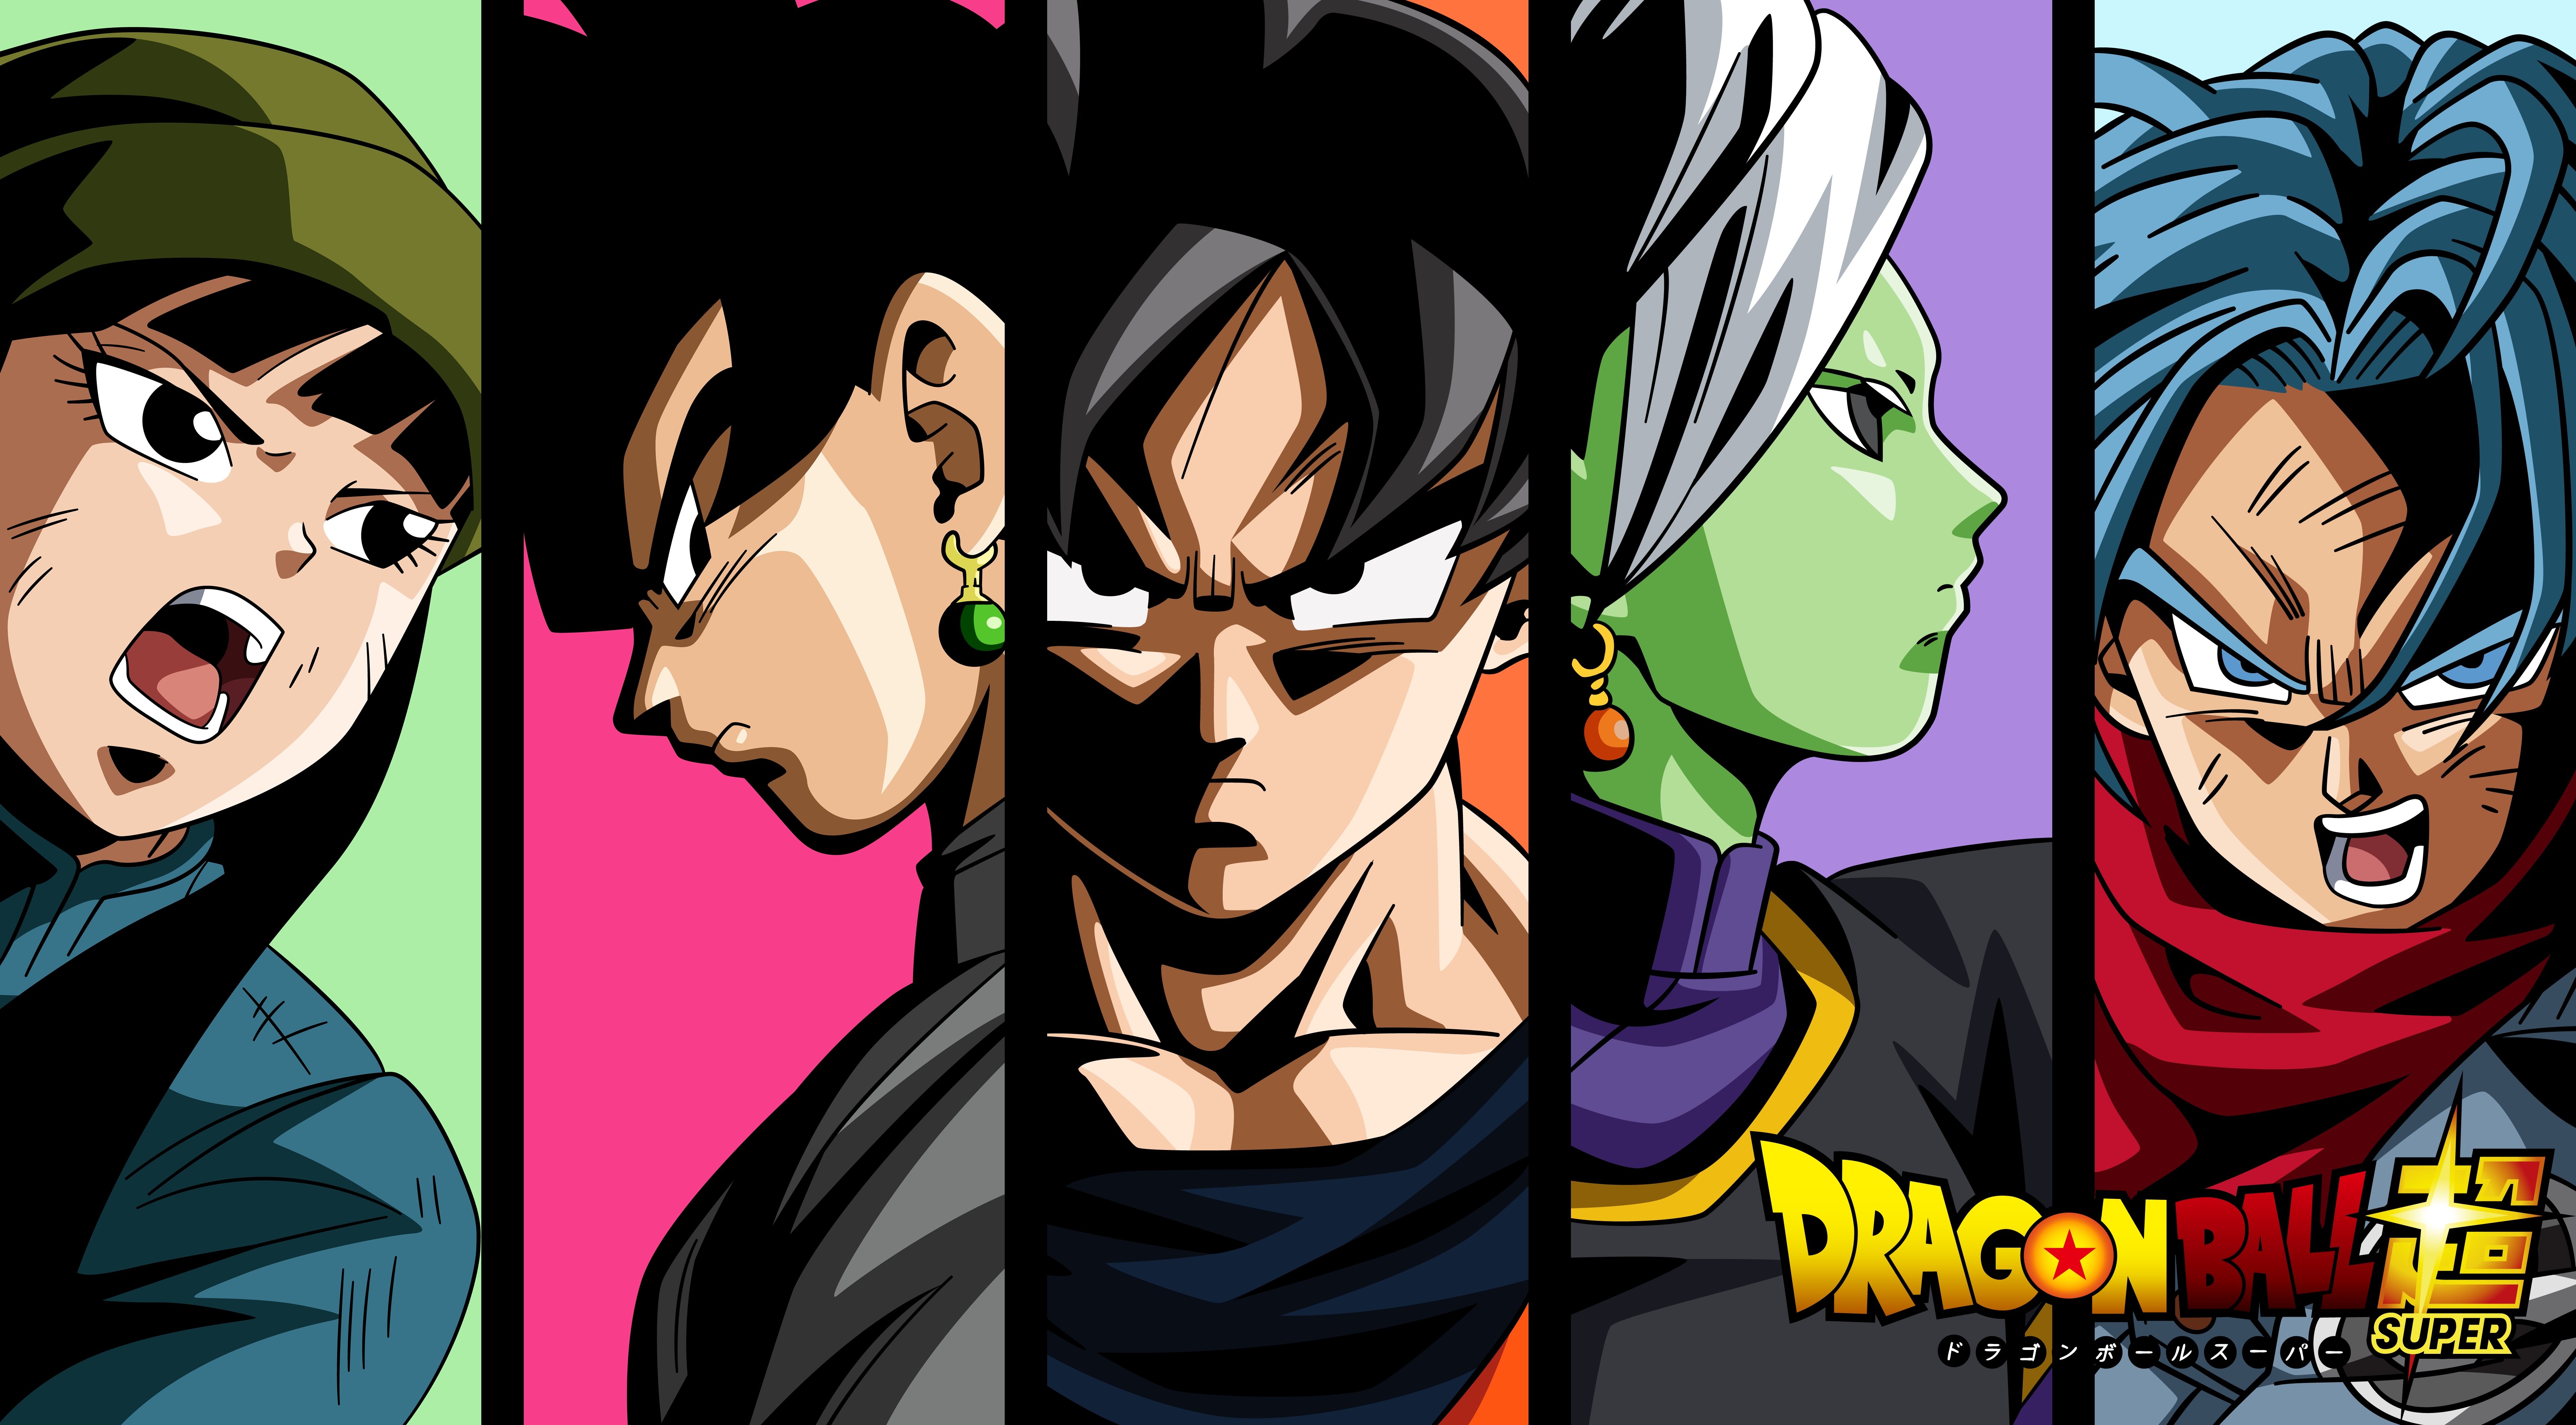 Anime Wallpaper Dragon Ball Super, Mai, Black Goku, Goku, Zamasu and Future Trunks Saga